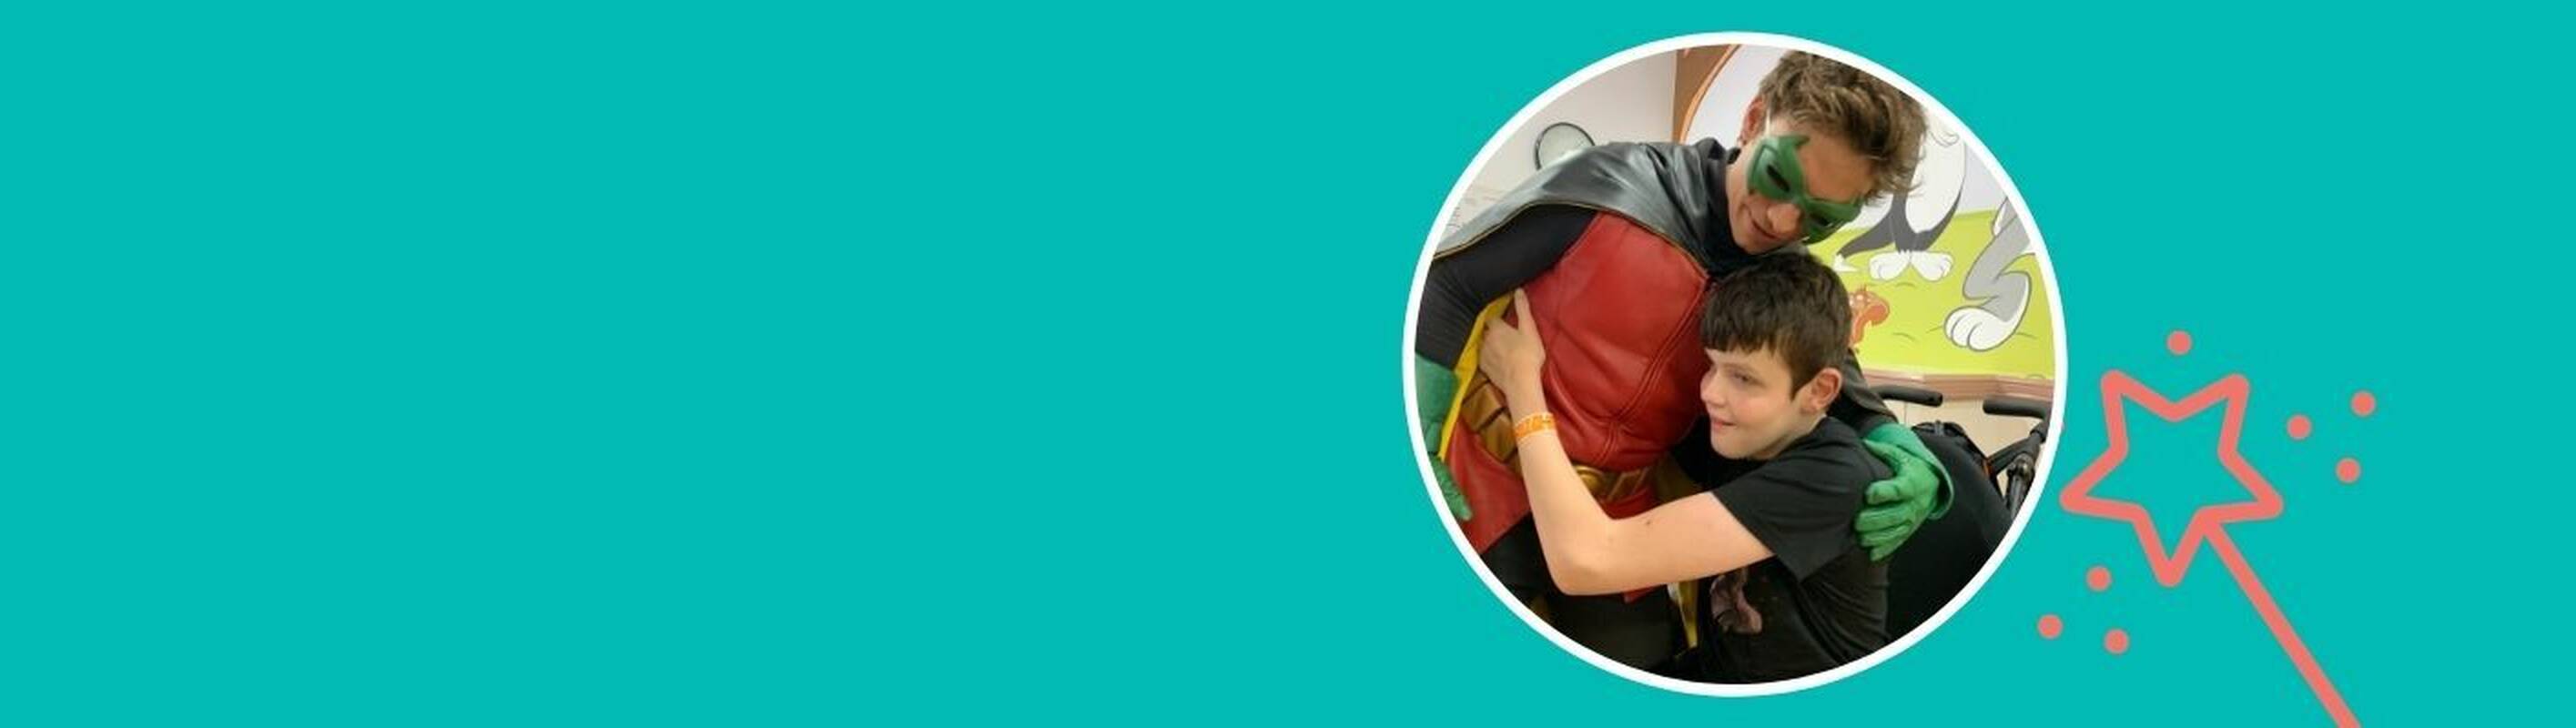 Make-A-Wish Australia wish kid Jerrah hugging superhero robin